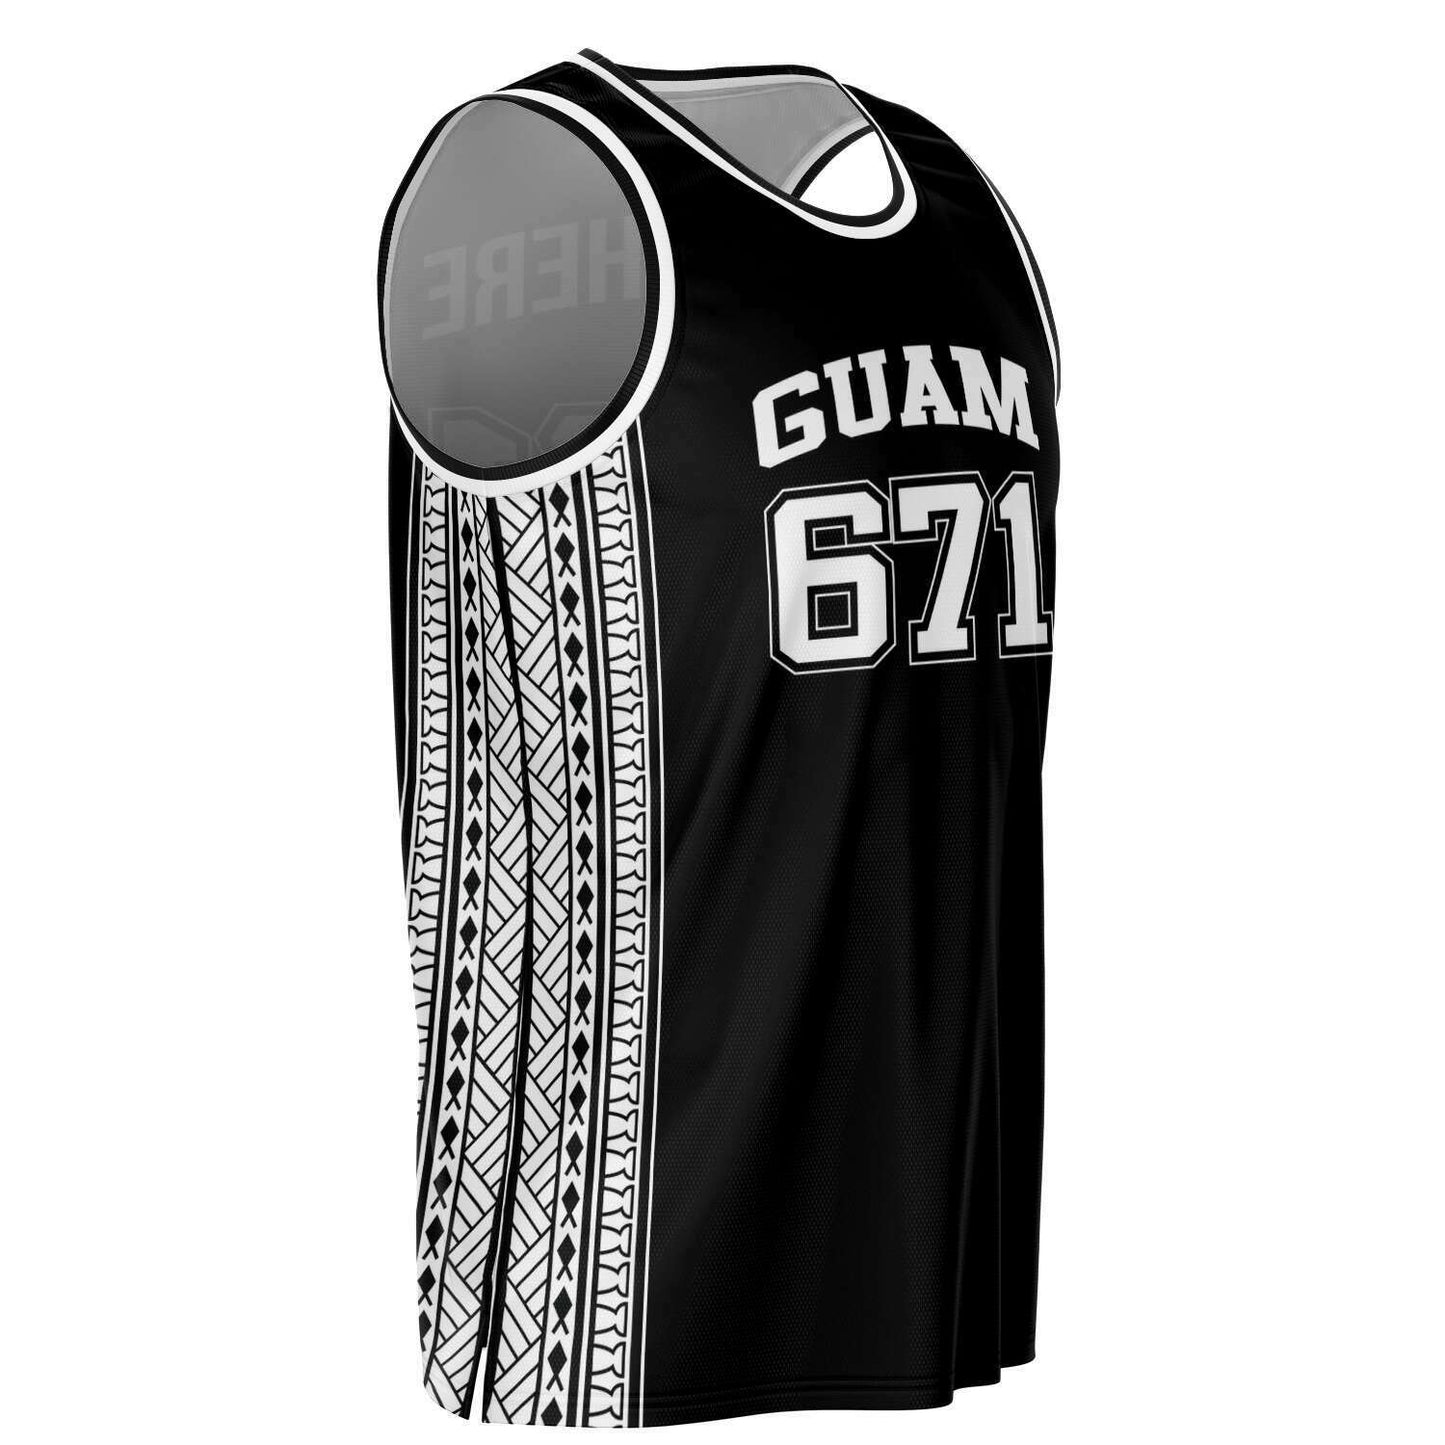 Guam 671 Tribal Basketball Jersey with Personalization